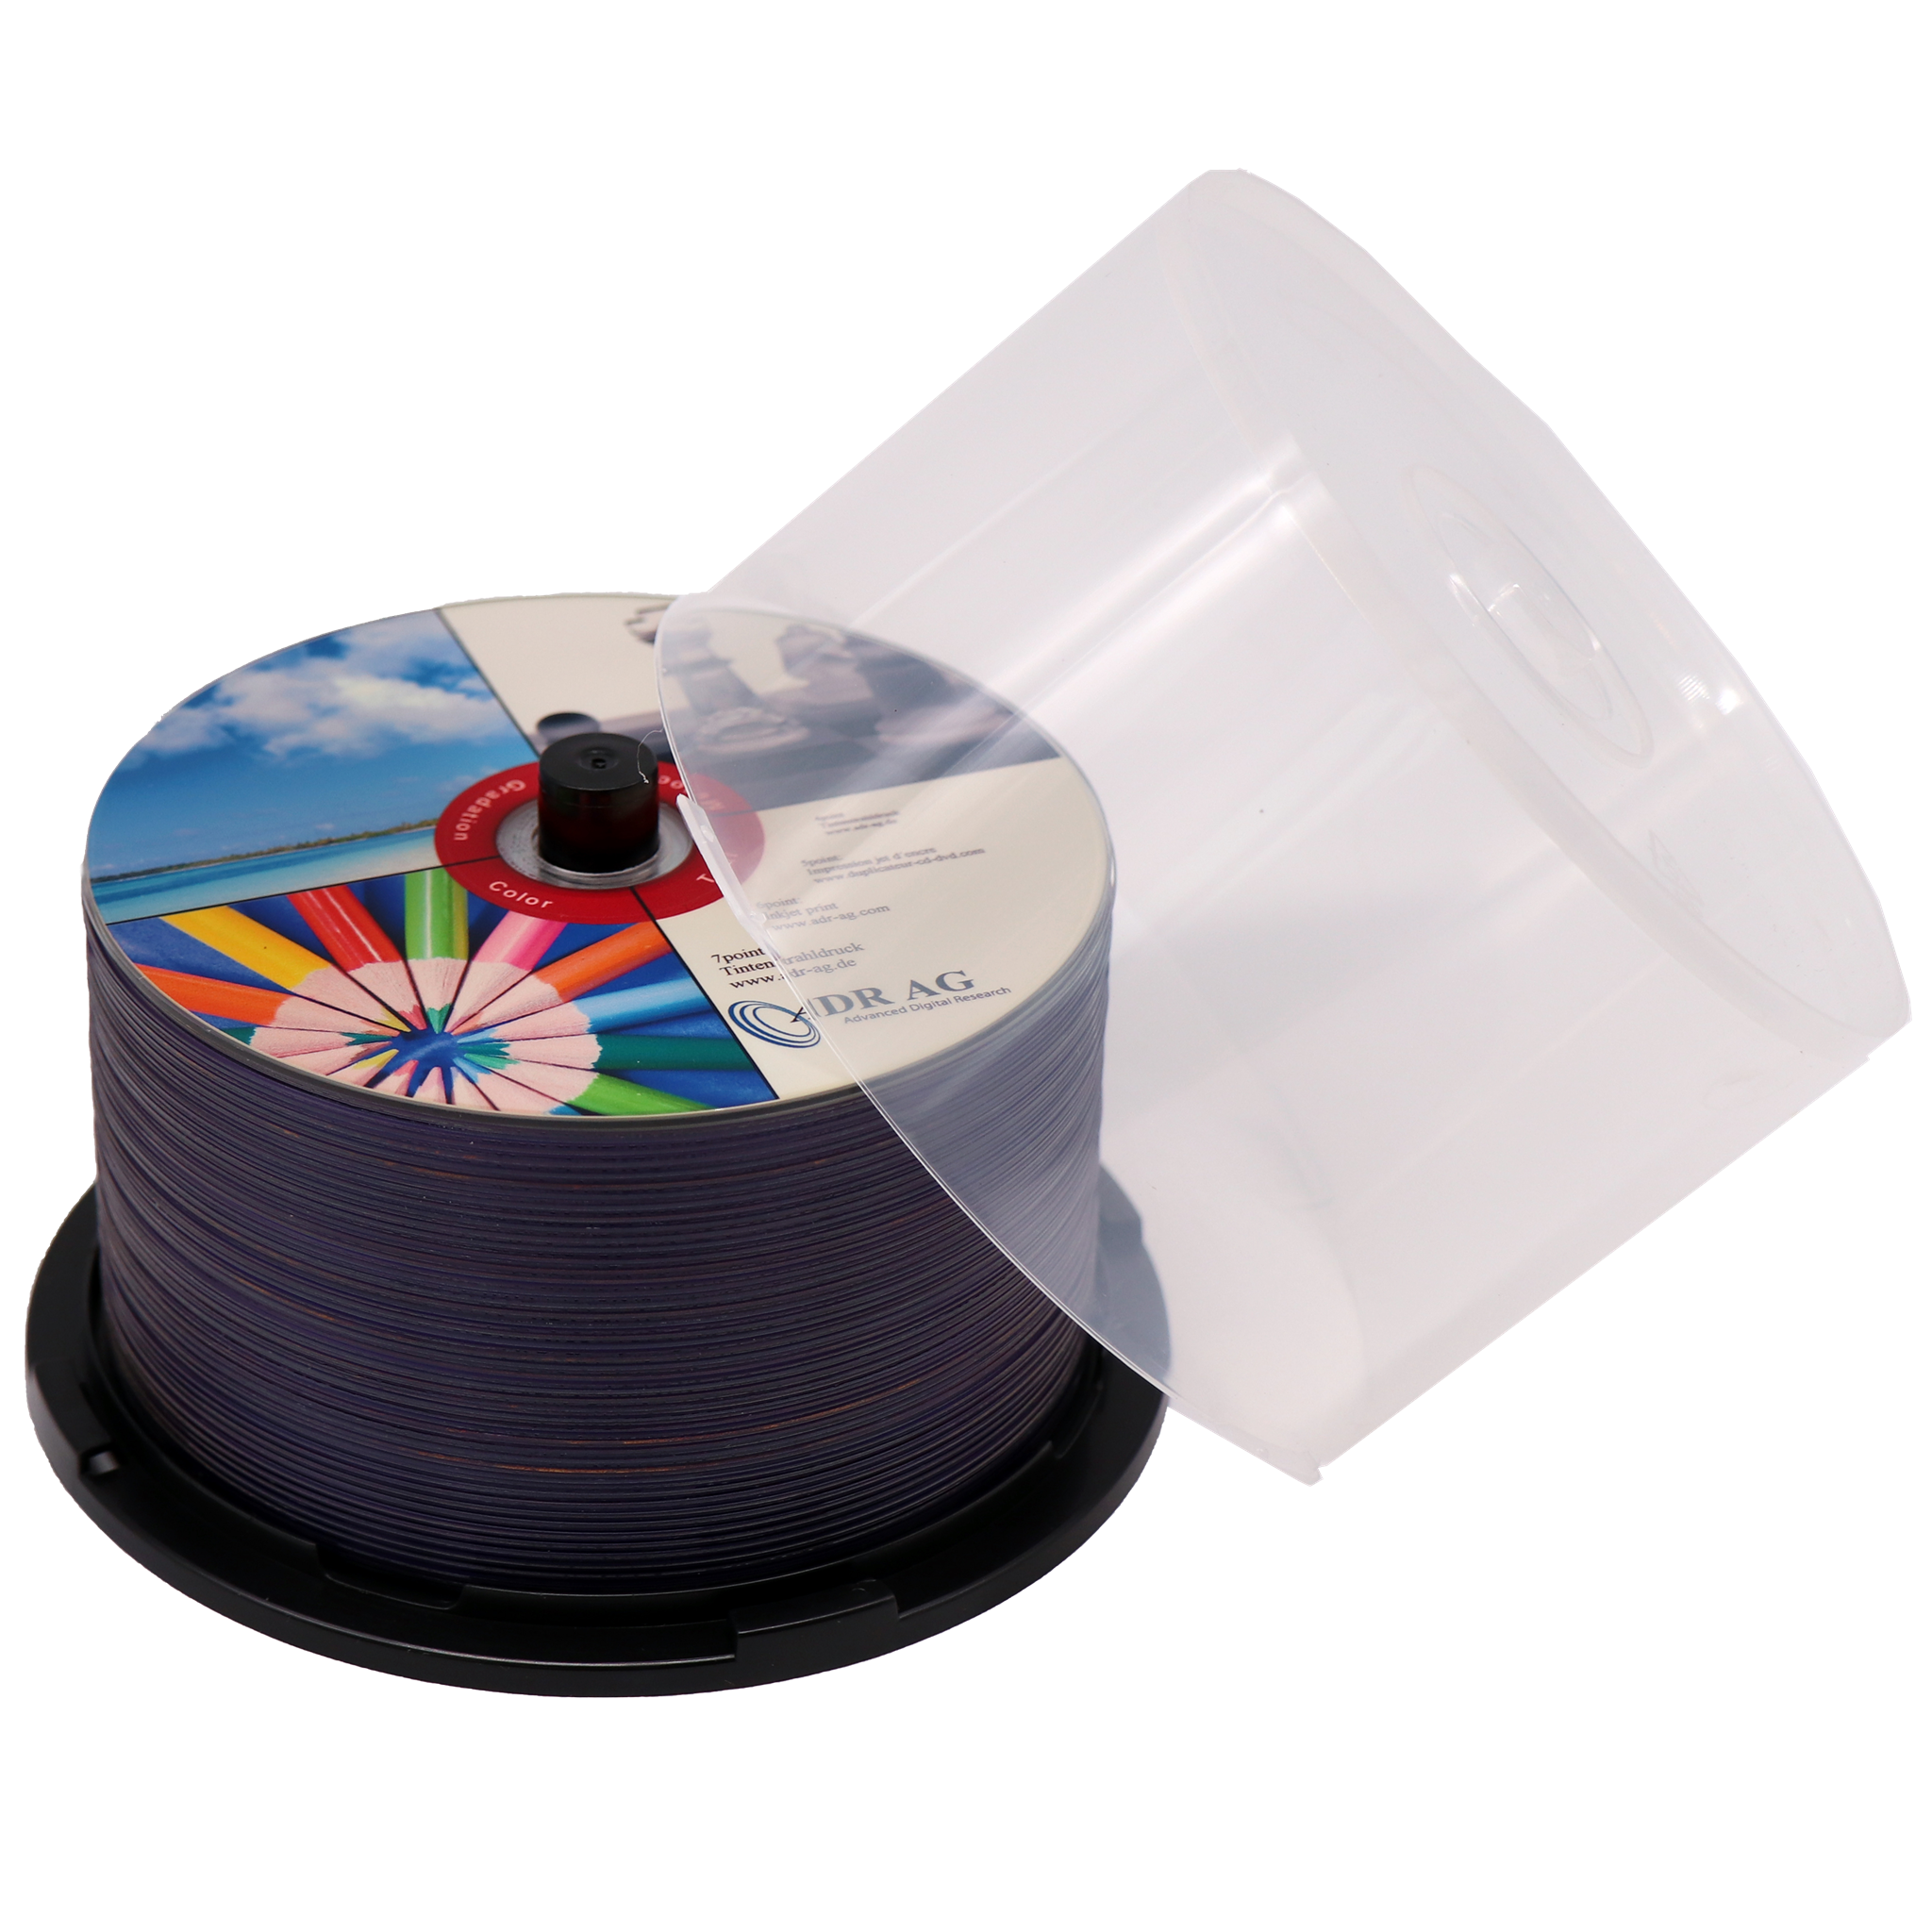 Picture of CD - Kopiering och utskrift + Cakebox-spindel